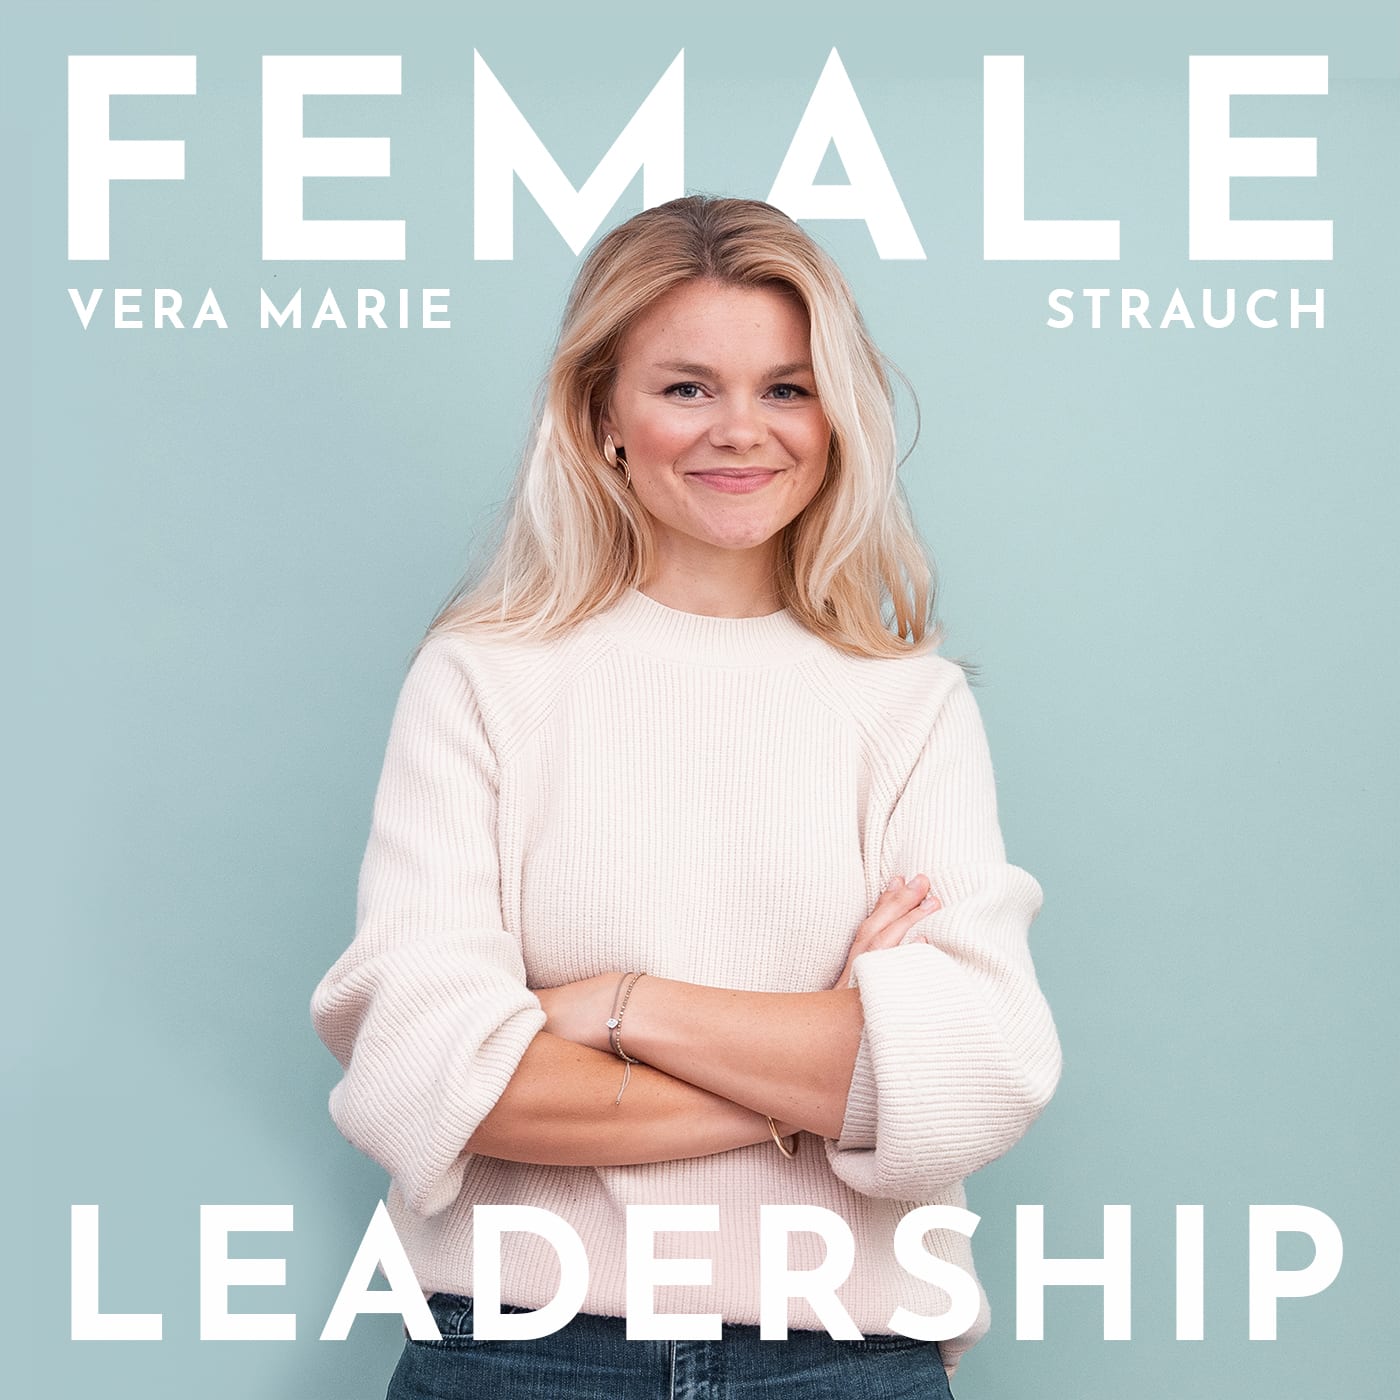 Female Leadership Podcast